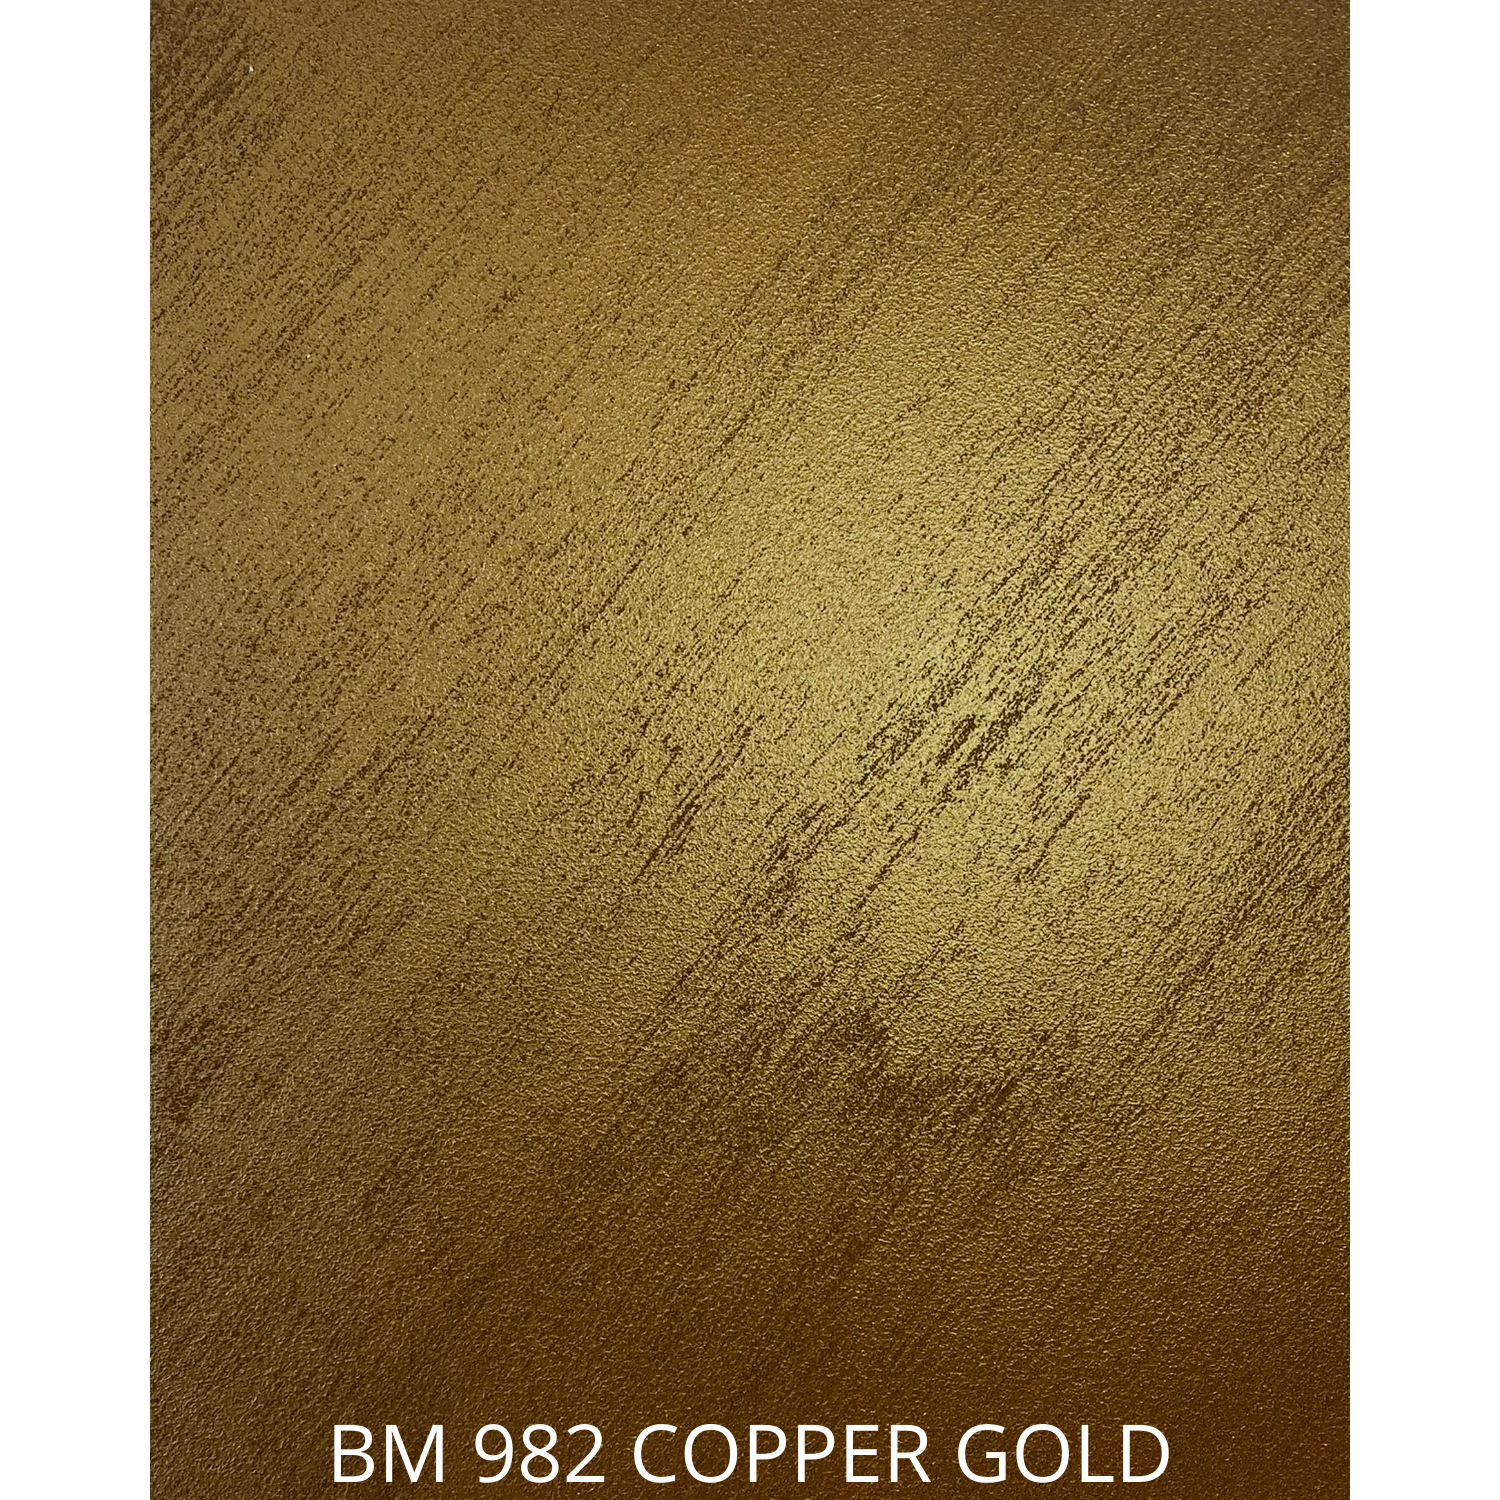 BM 982 COPPER GOLD